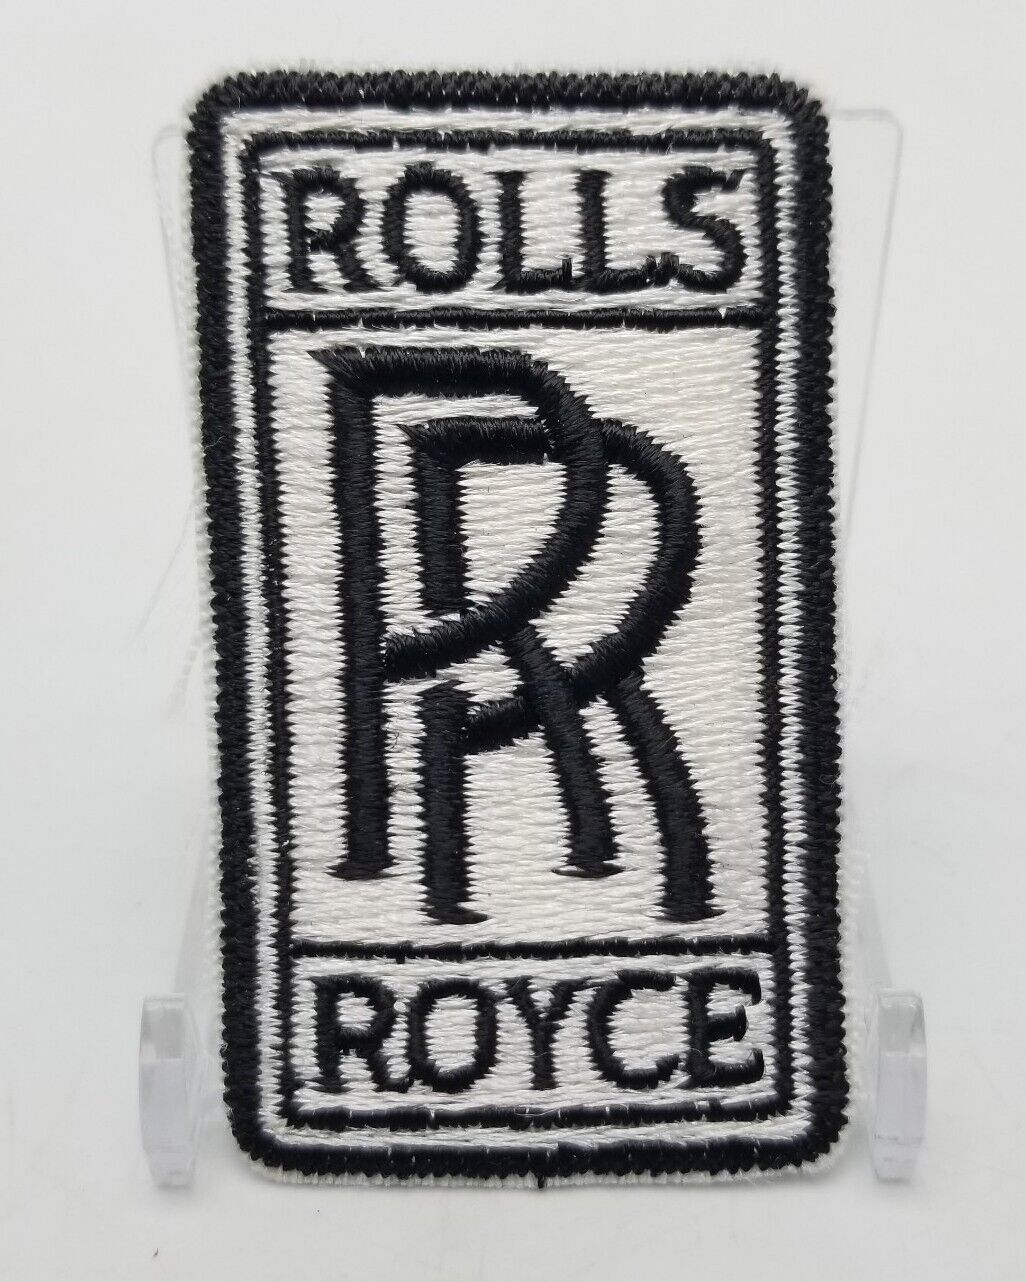 Rolls Royce Black Silver Logo Patch Iron Sew On Vintage Style Retro Jacket Hat